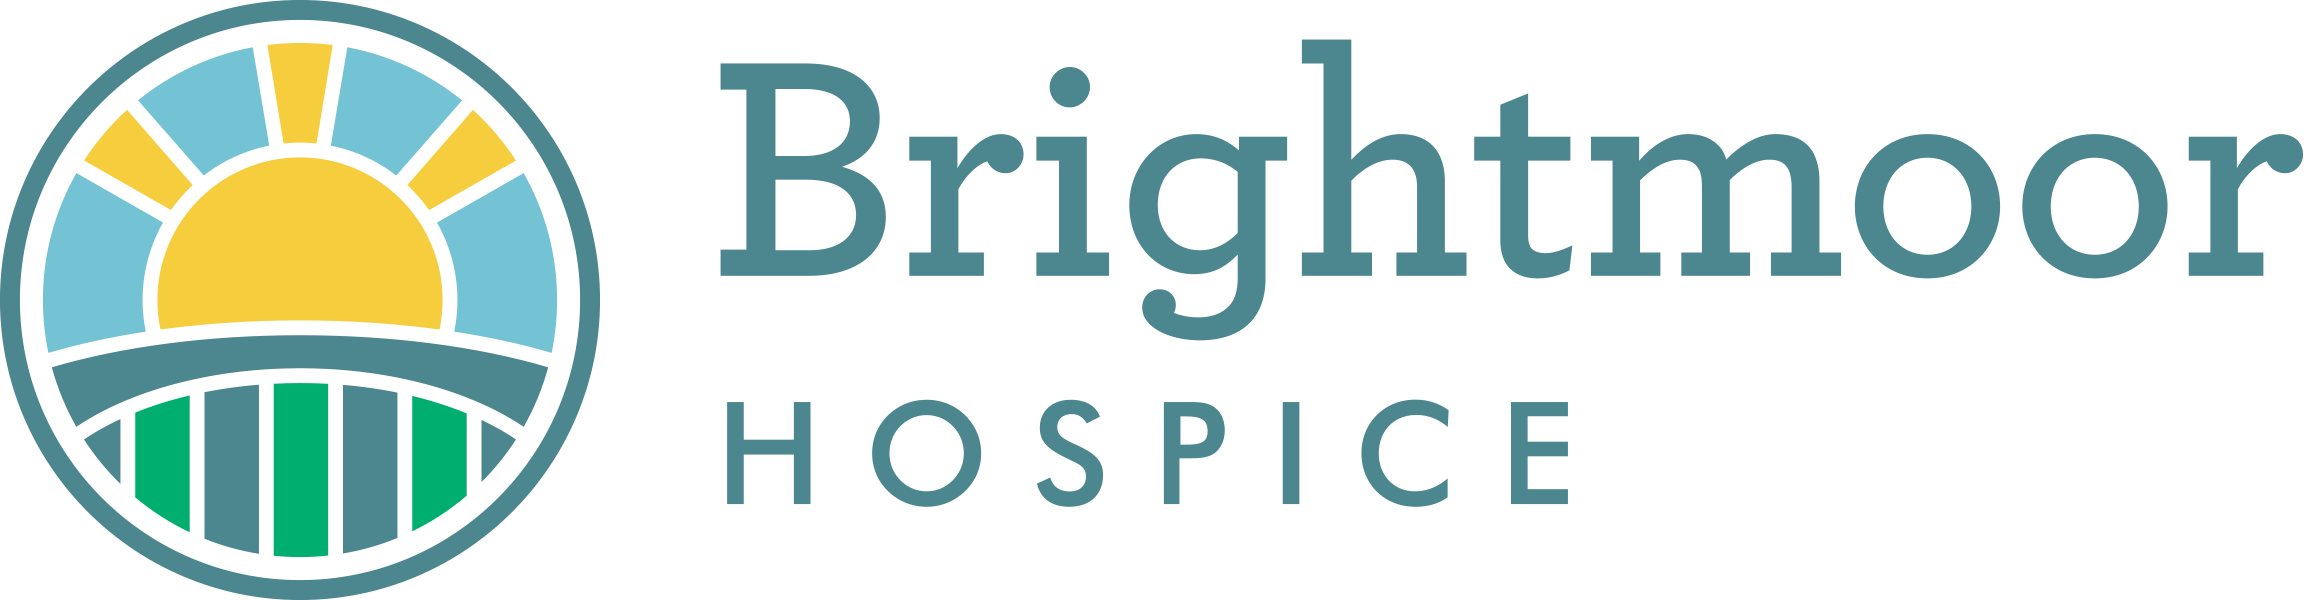 Brightmore Hospice